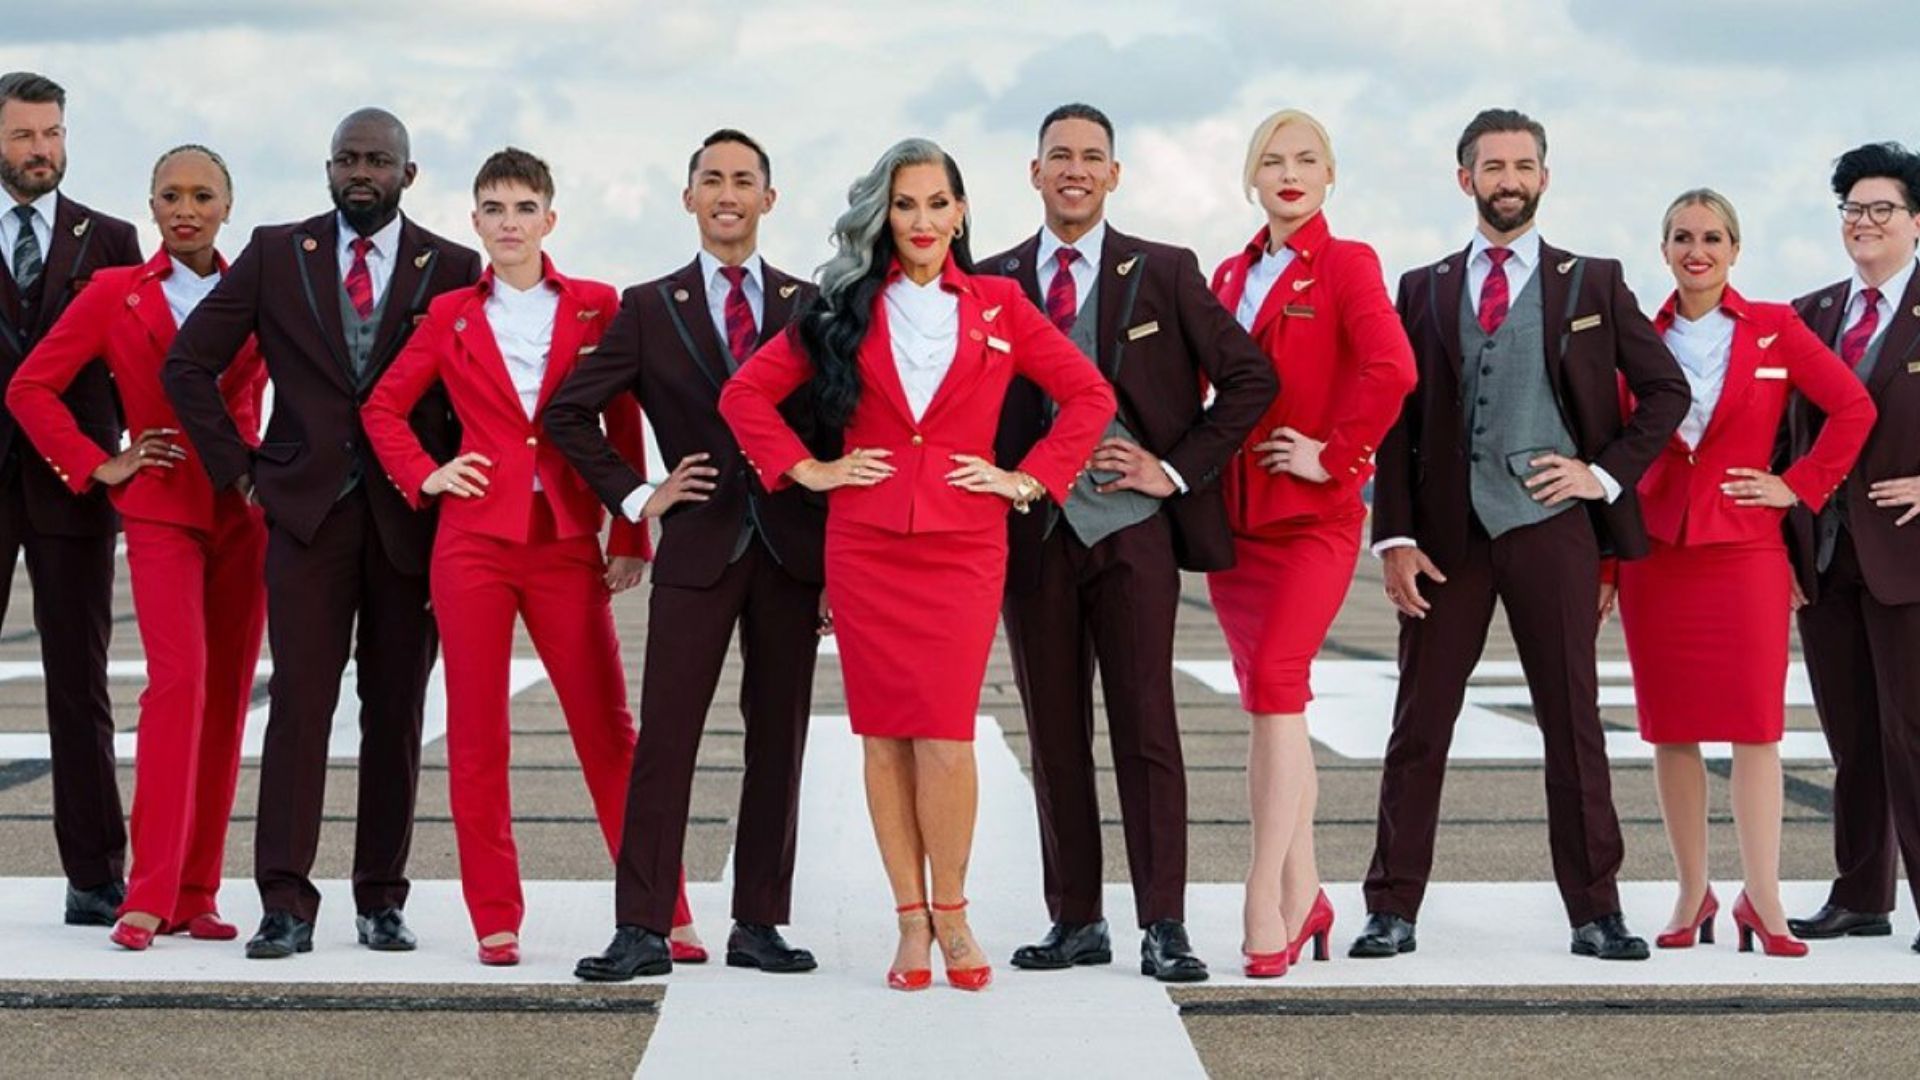 Flight Attendant Uniforms Are Ditching Gender - WSJ